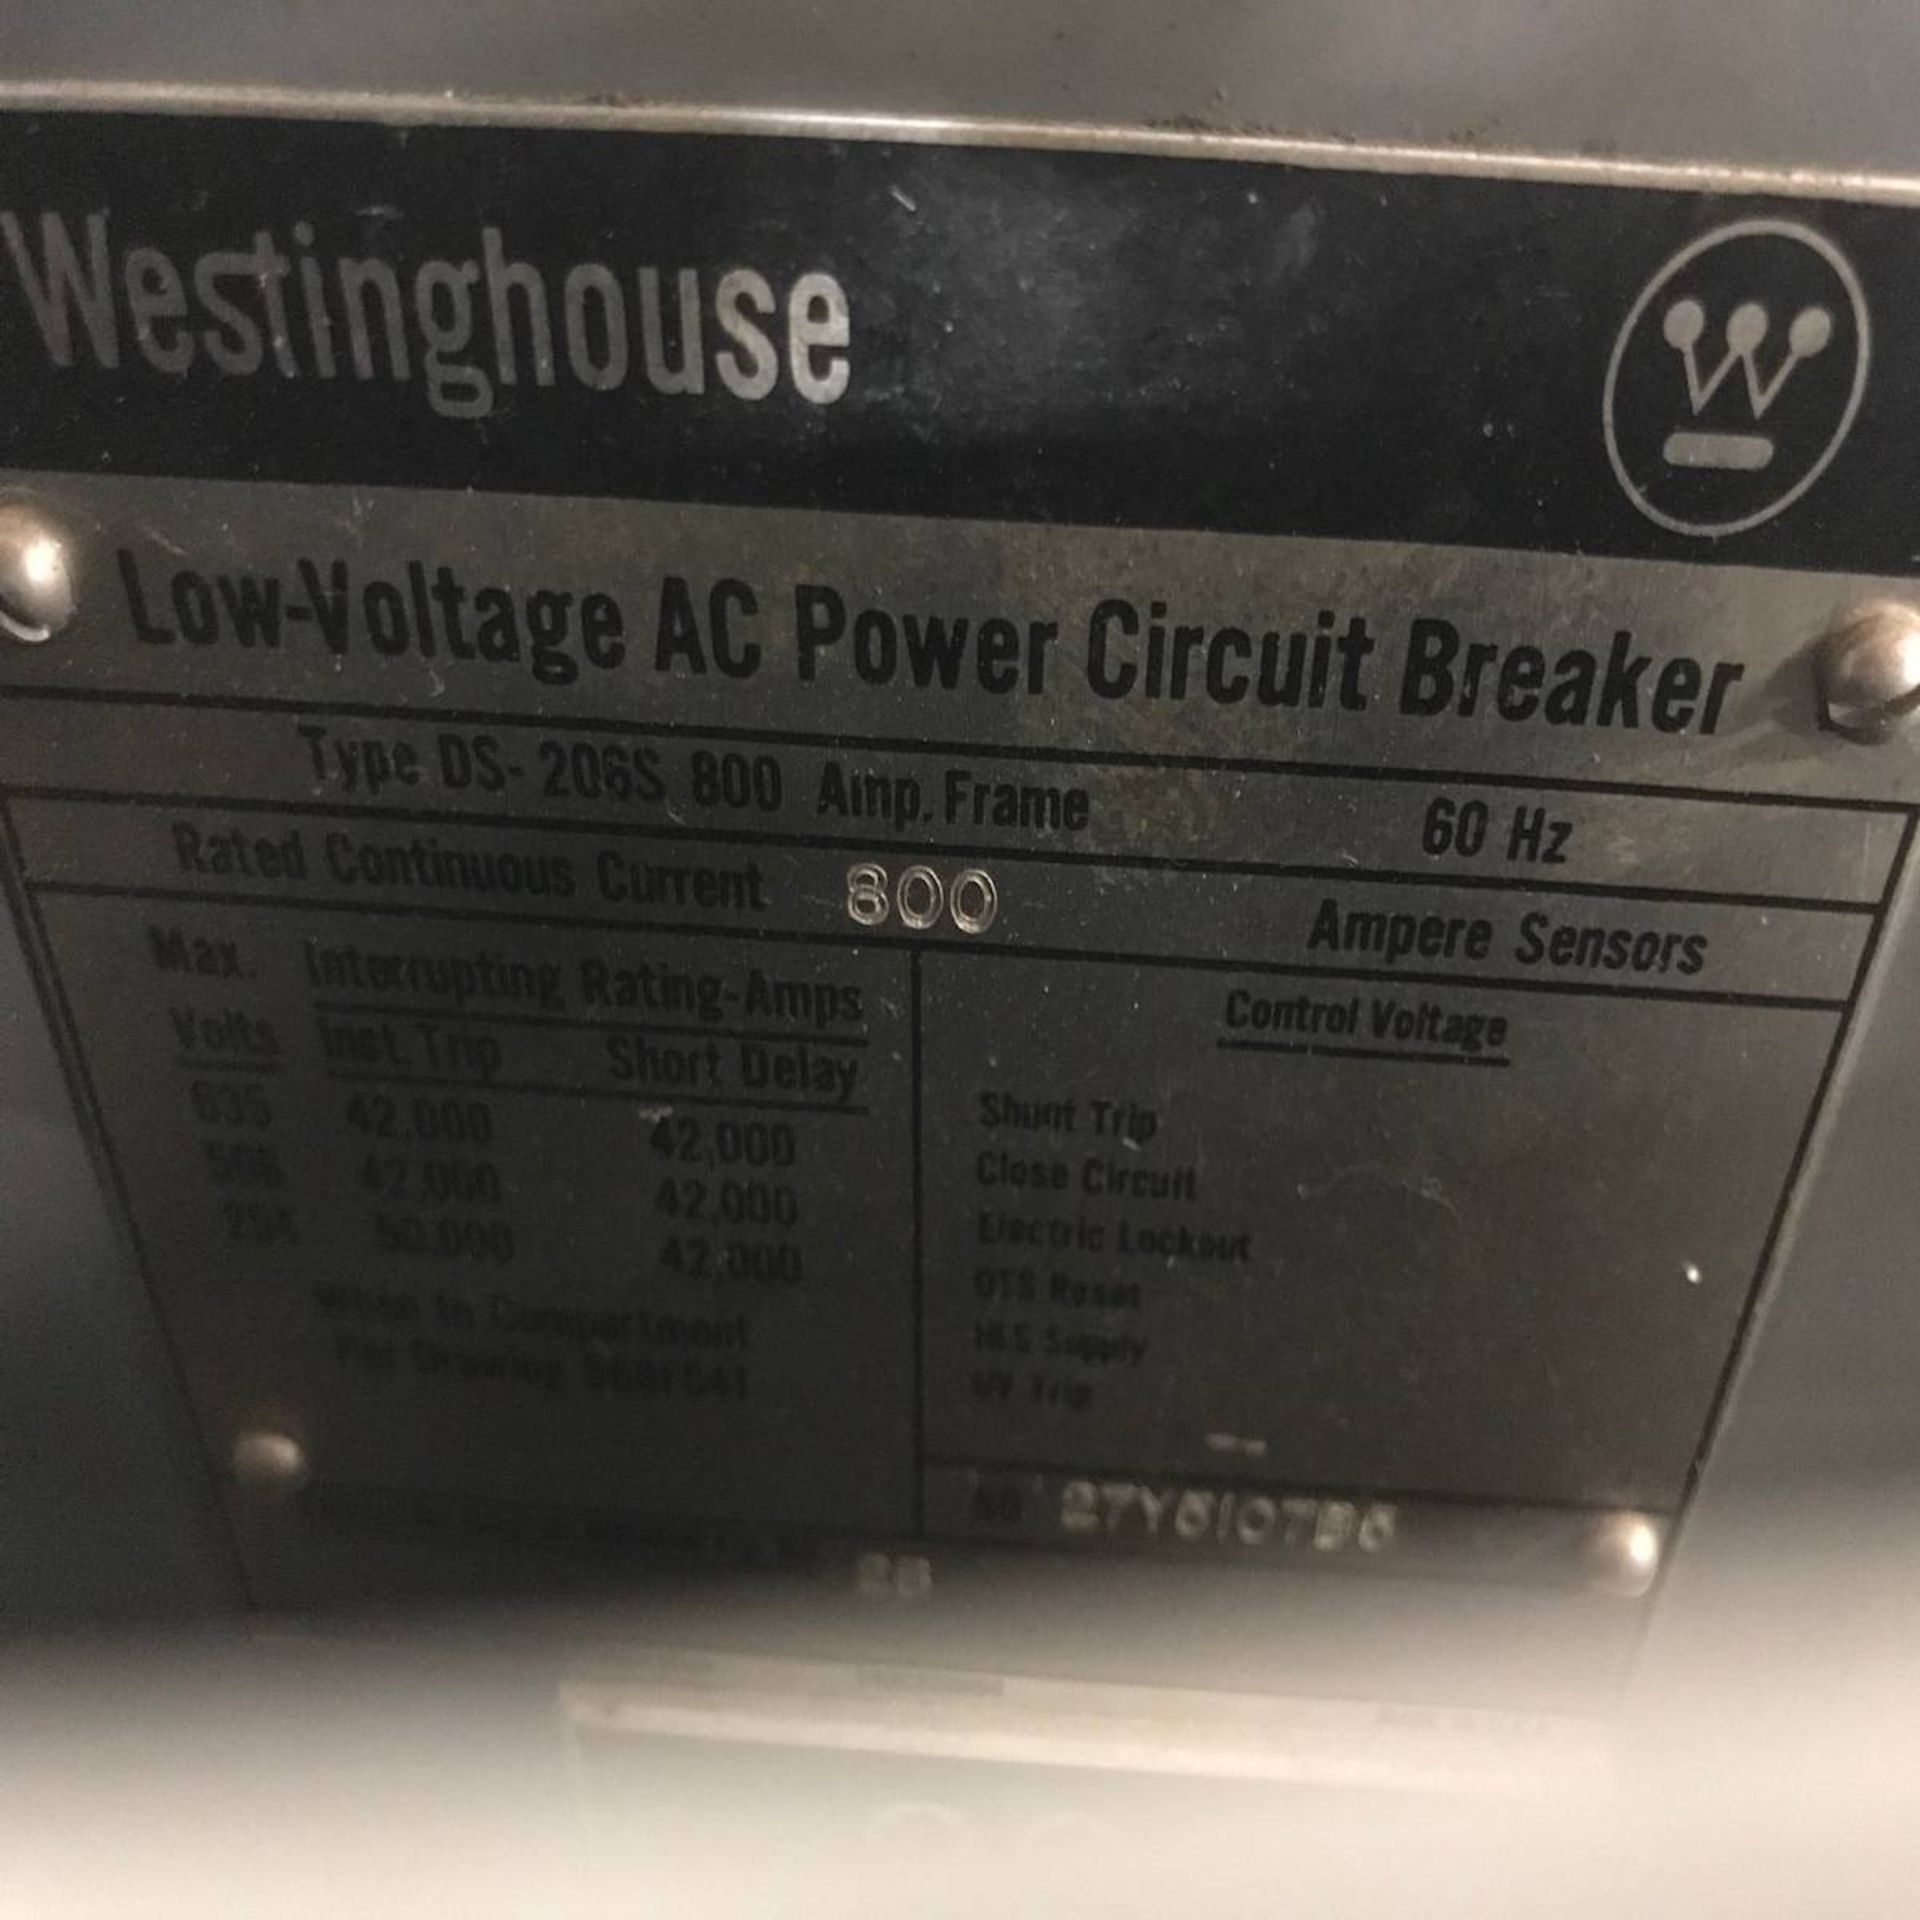 Westinghouse DSL-206 Low Voltage AC Power Circuit Breaker - Image 5 of 5